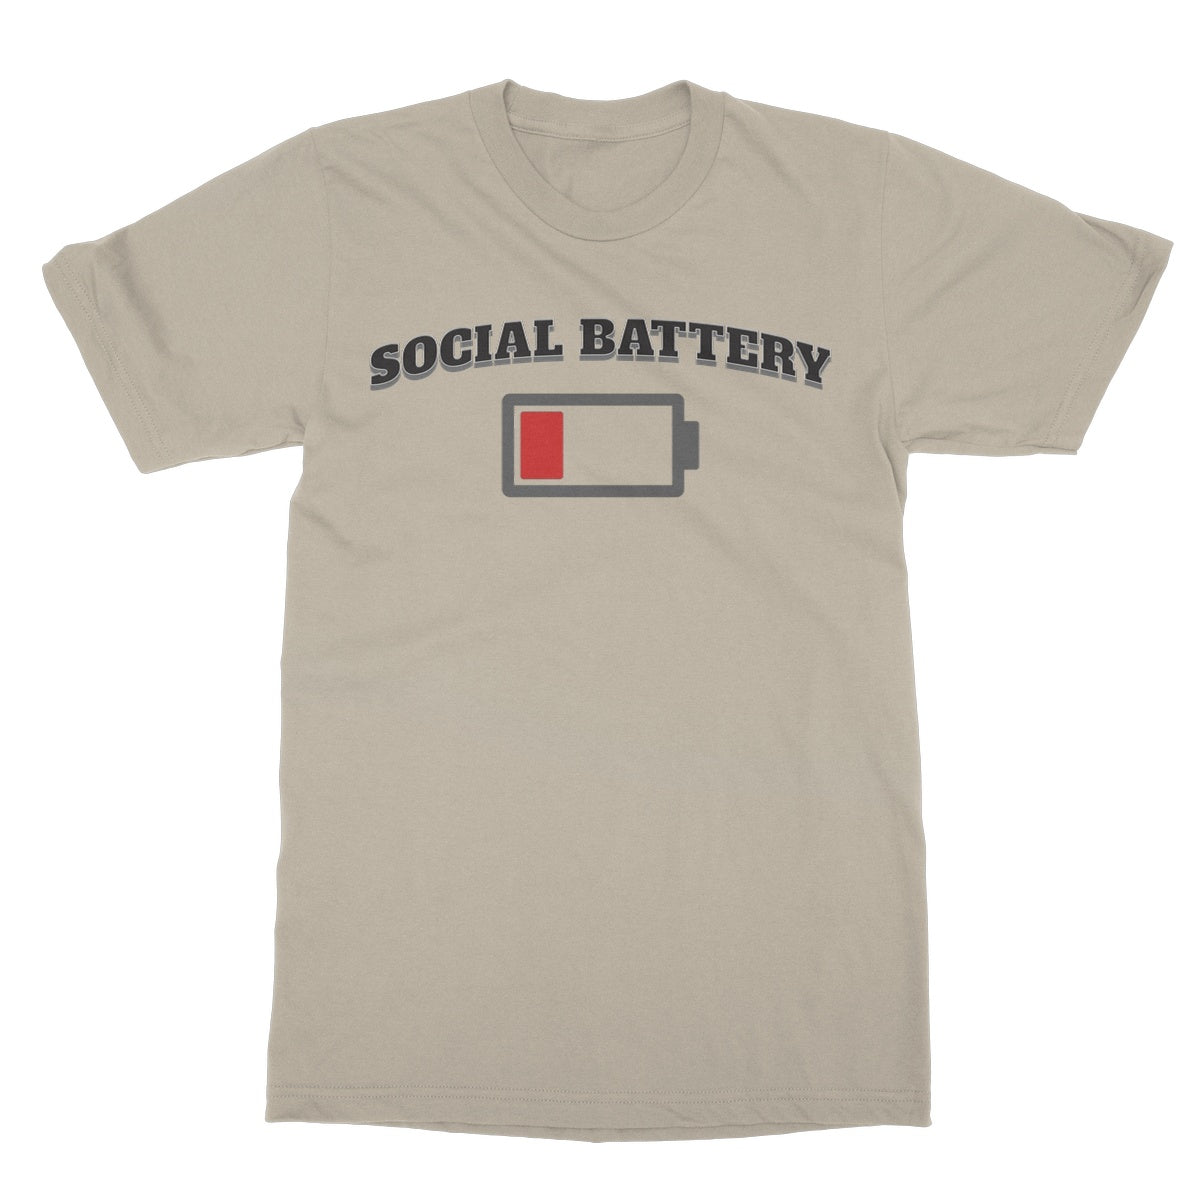 low social battery t shirt sand